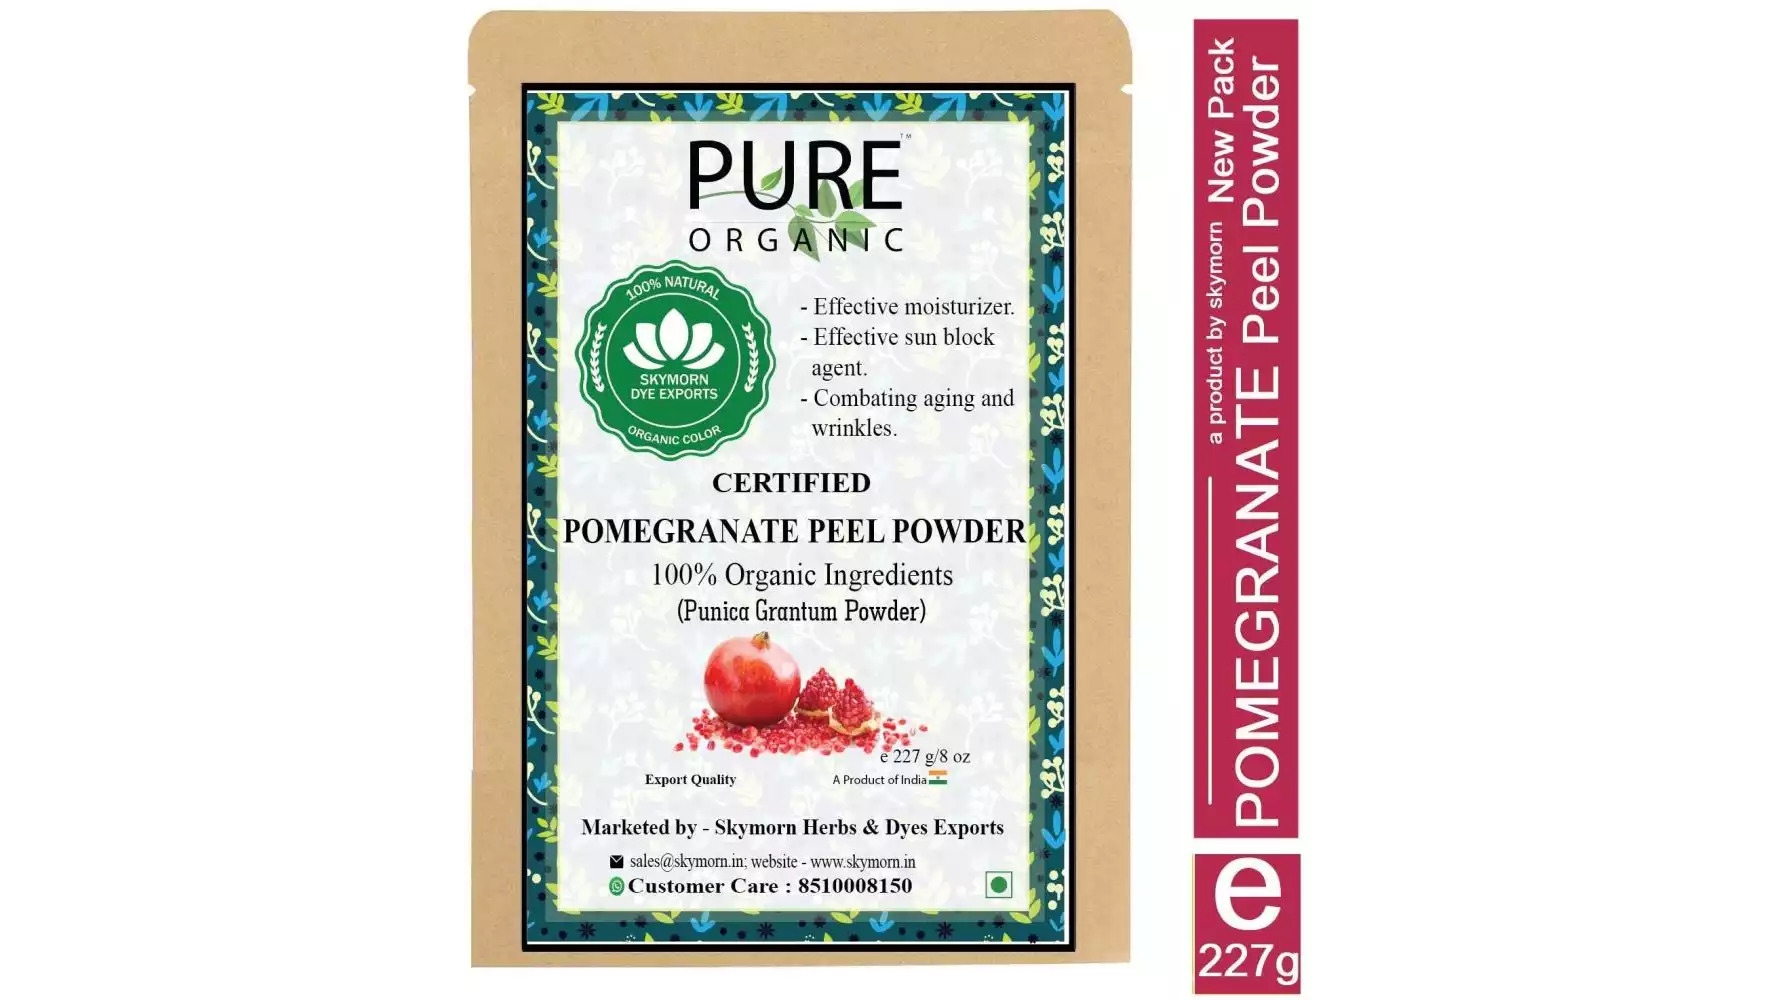 SkyMorn Premium Quality Pomegranate Peel Powder (227g)